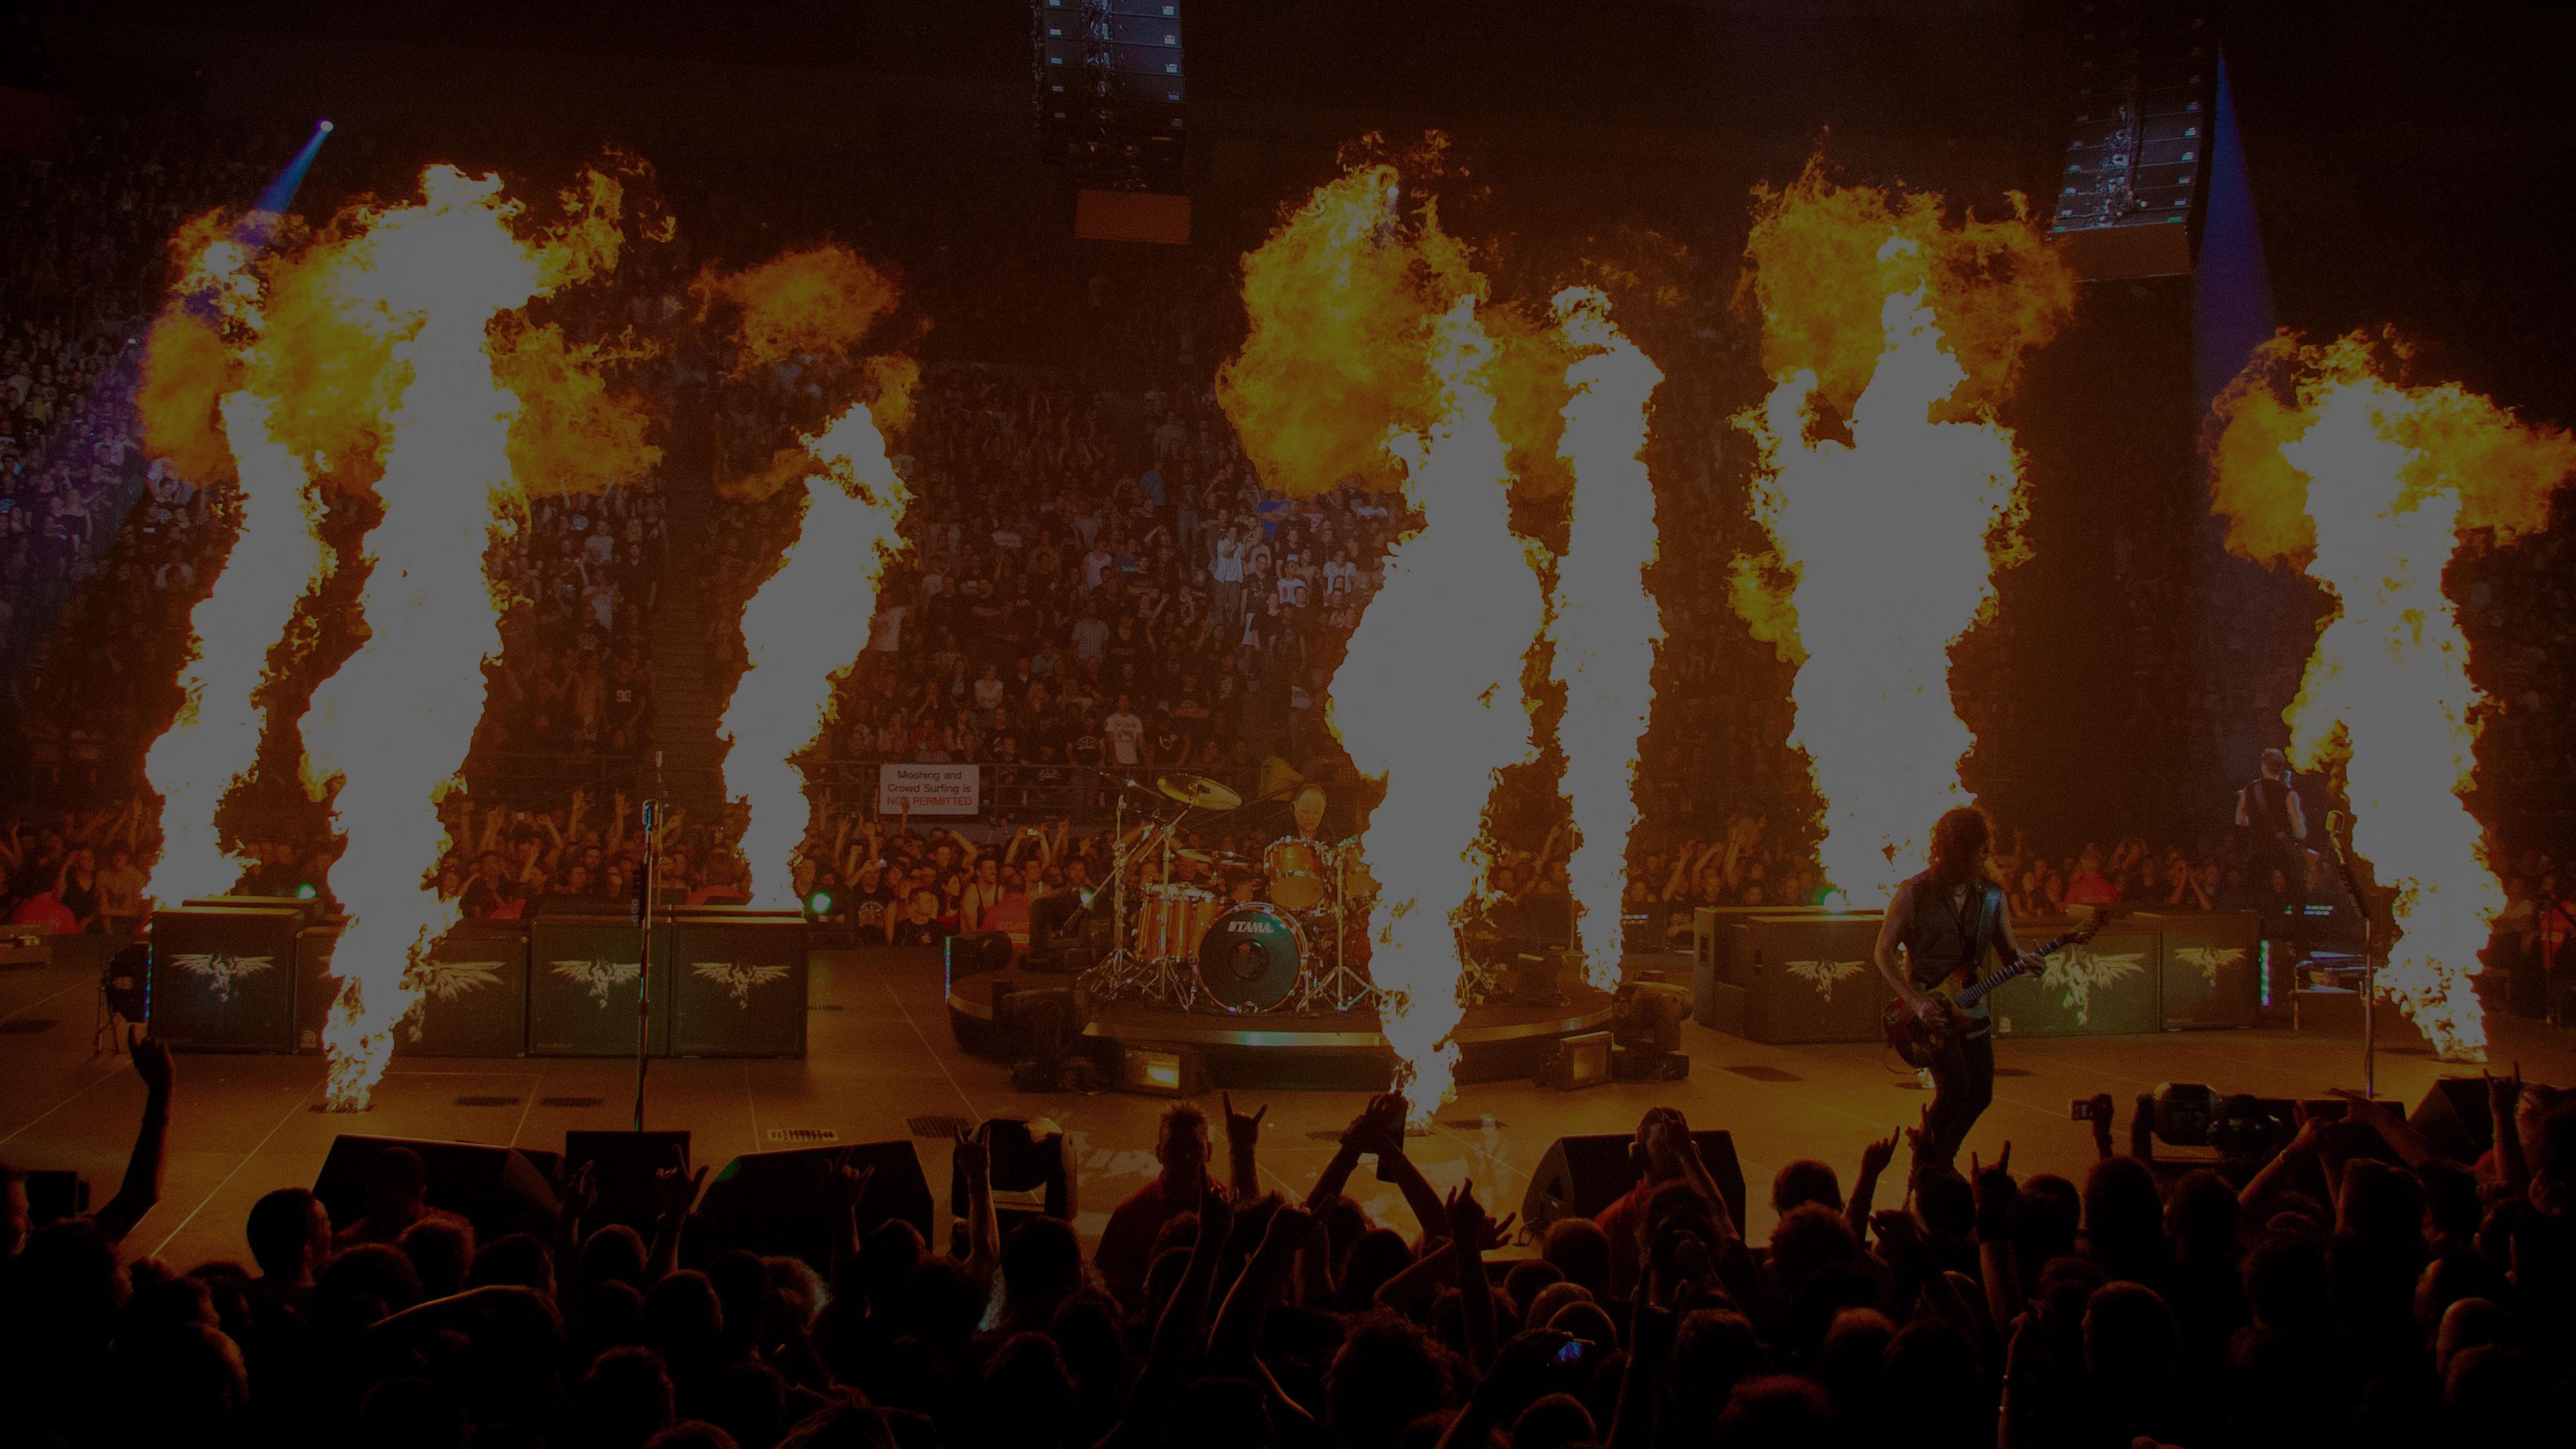 Metallica at Rod Laver Arena in Melbourne, Australia on November 21, 2010